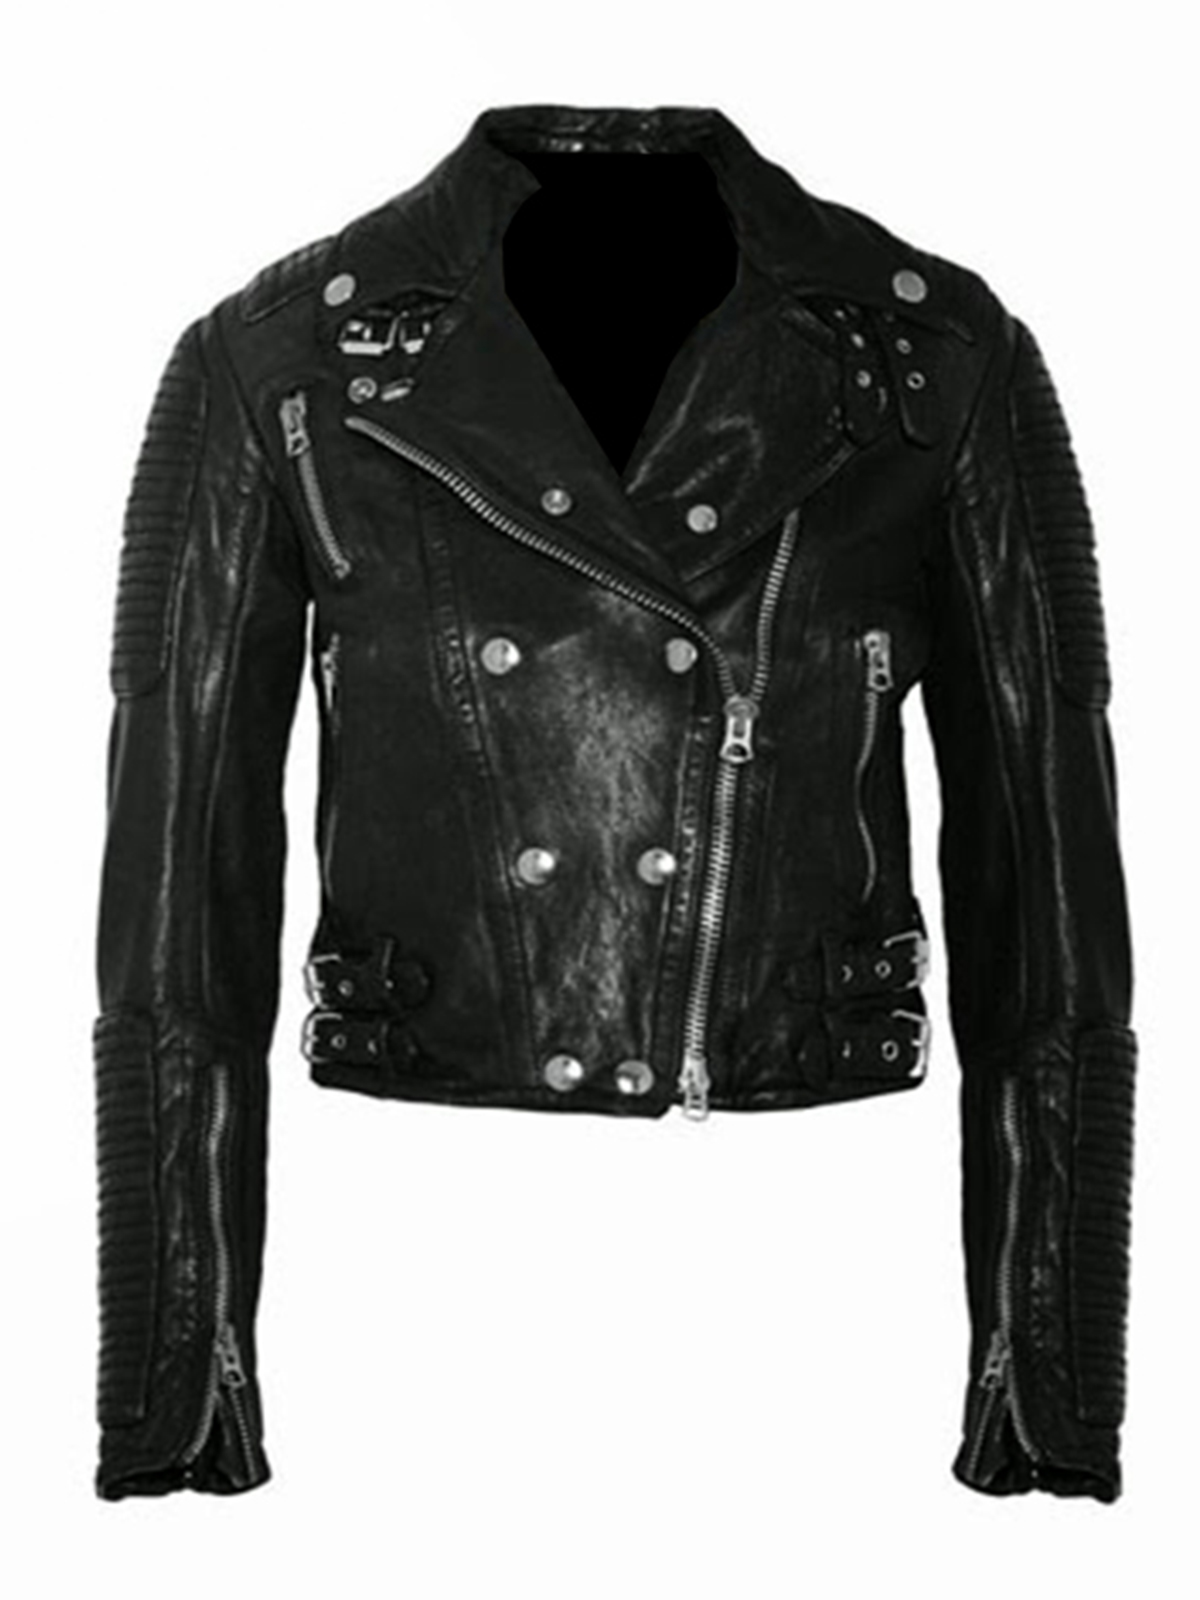 Keira Knightley Black Biker Jacket